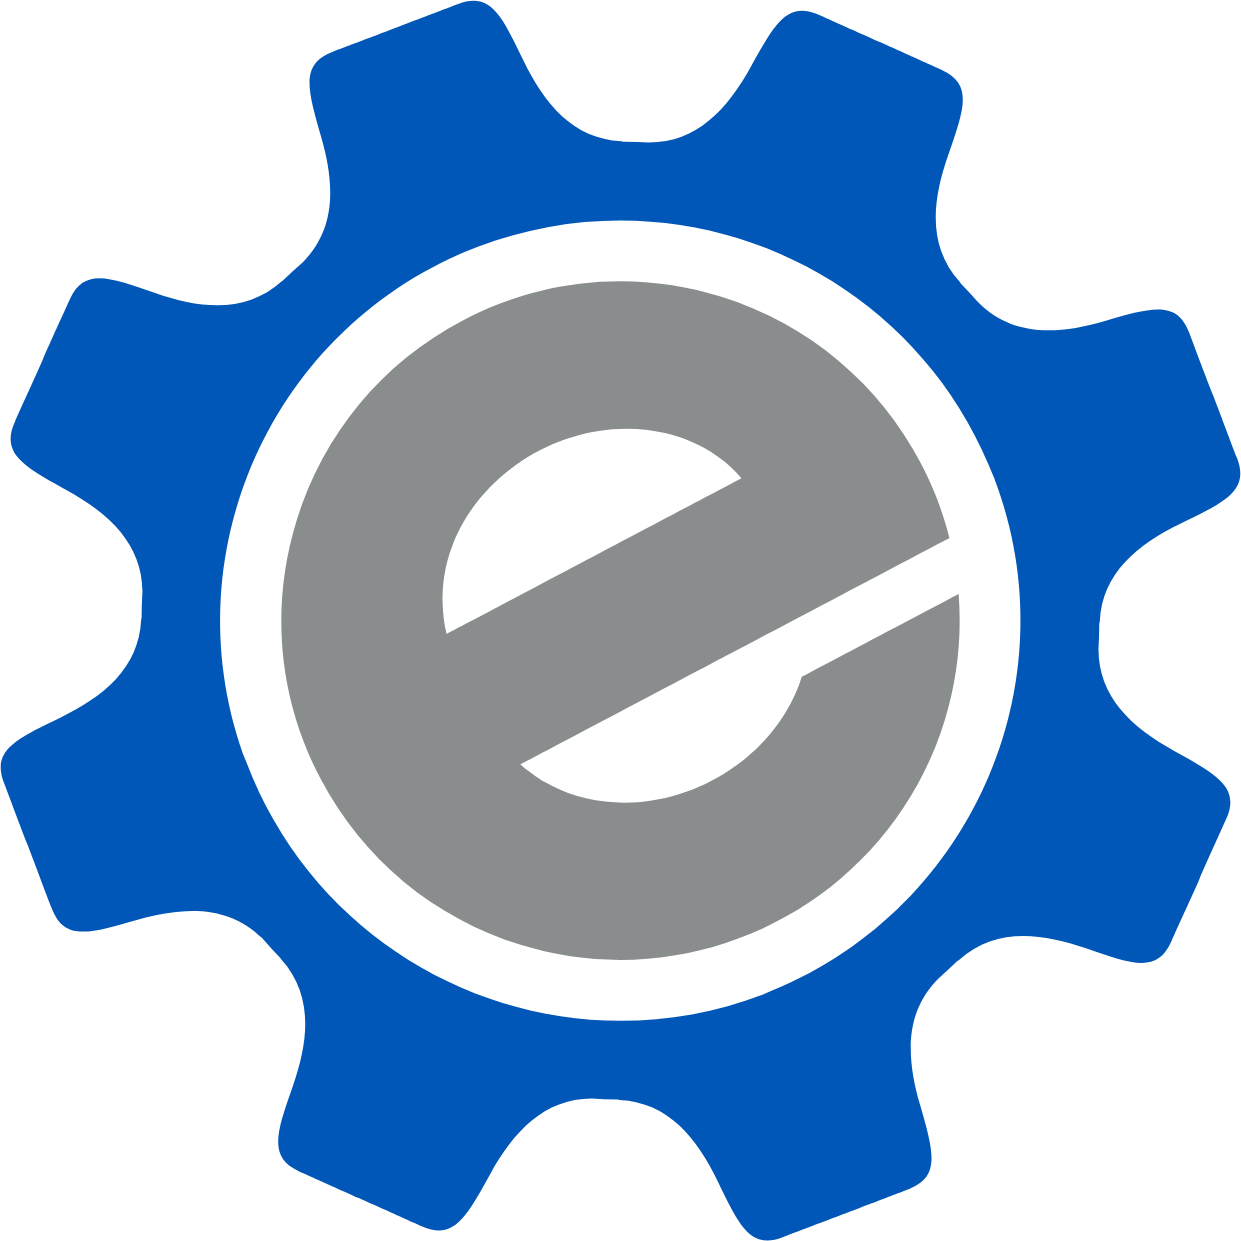 Essent Group logo (PNG transparent)